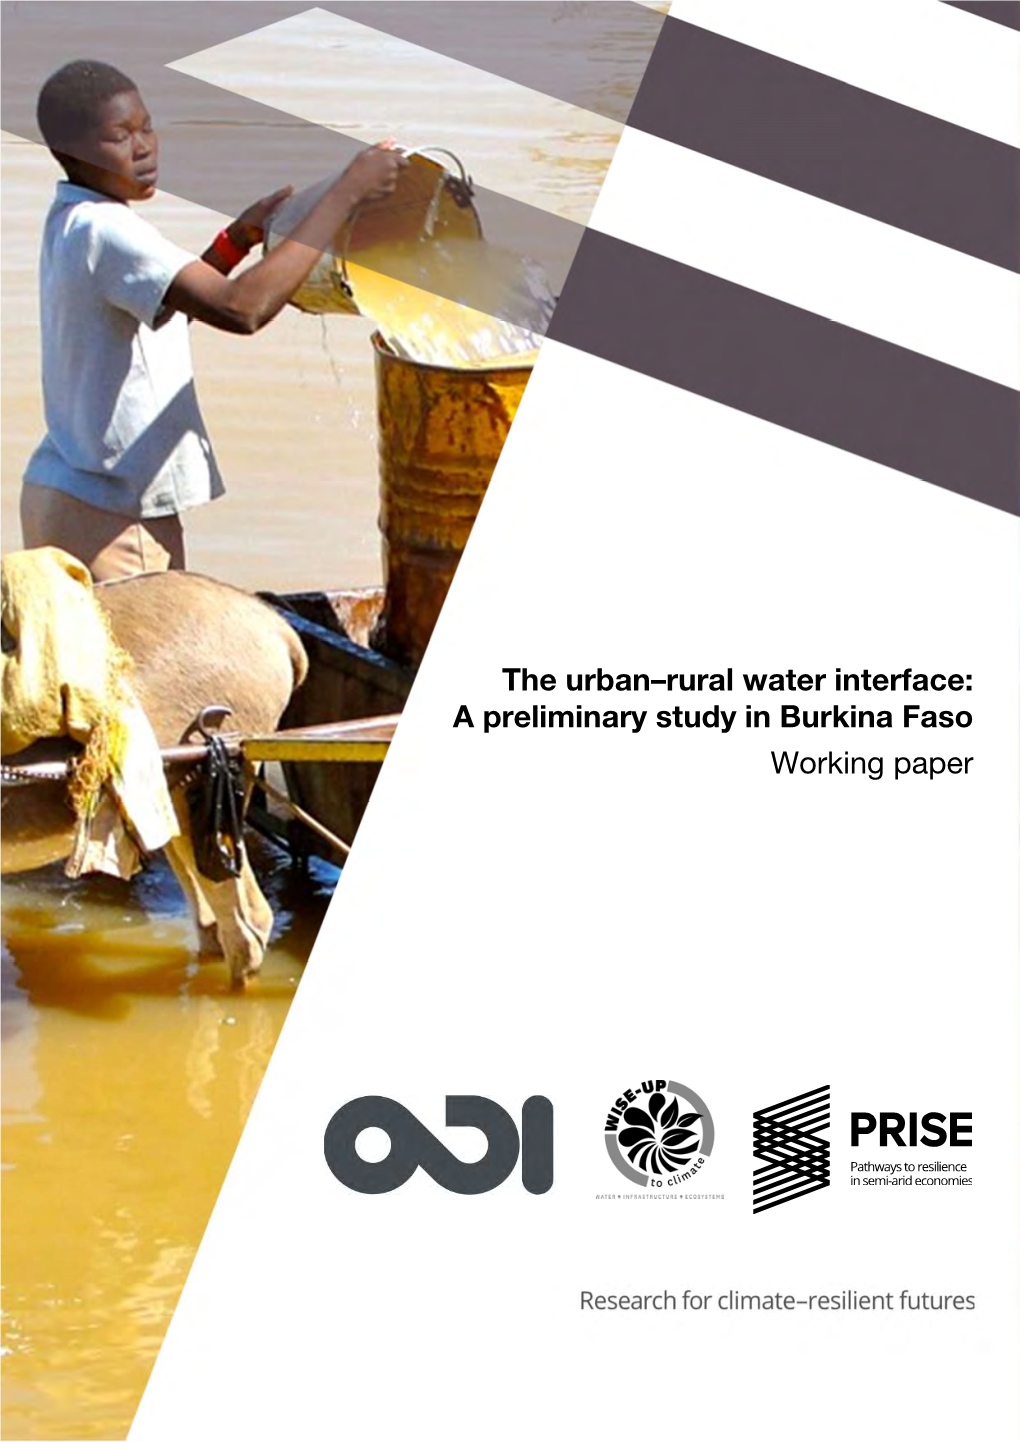 The Urban-Rural Water Interface: a Preliminary Study in Burkina Faso